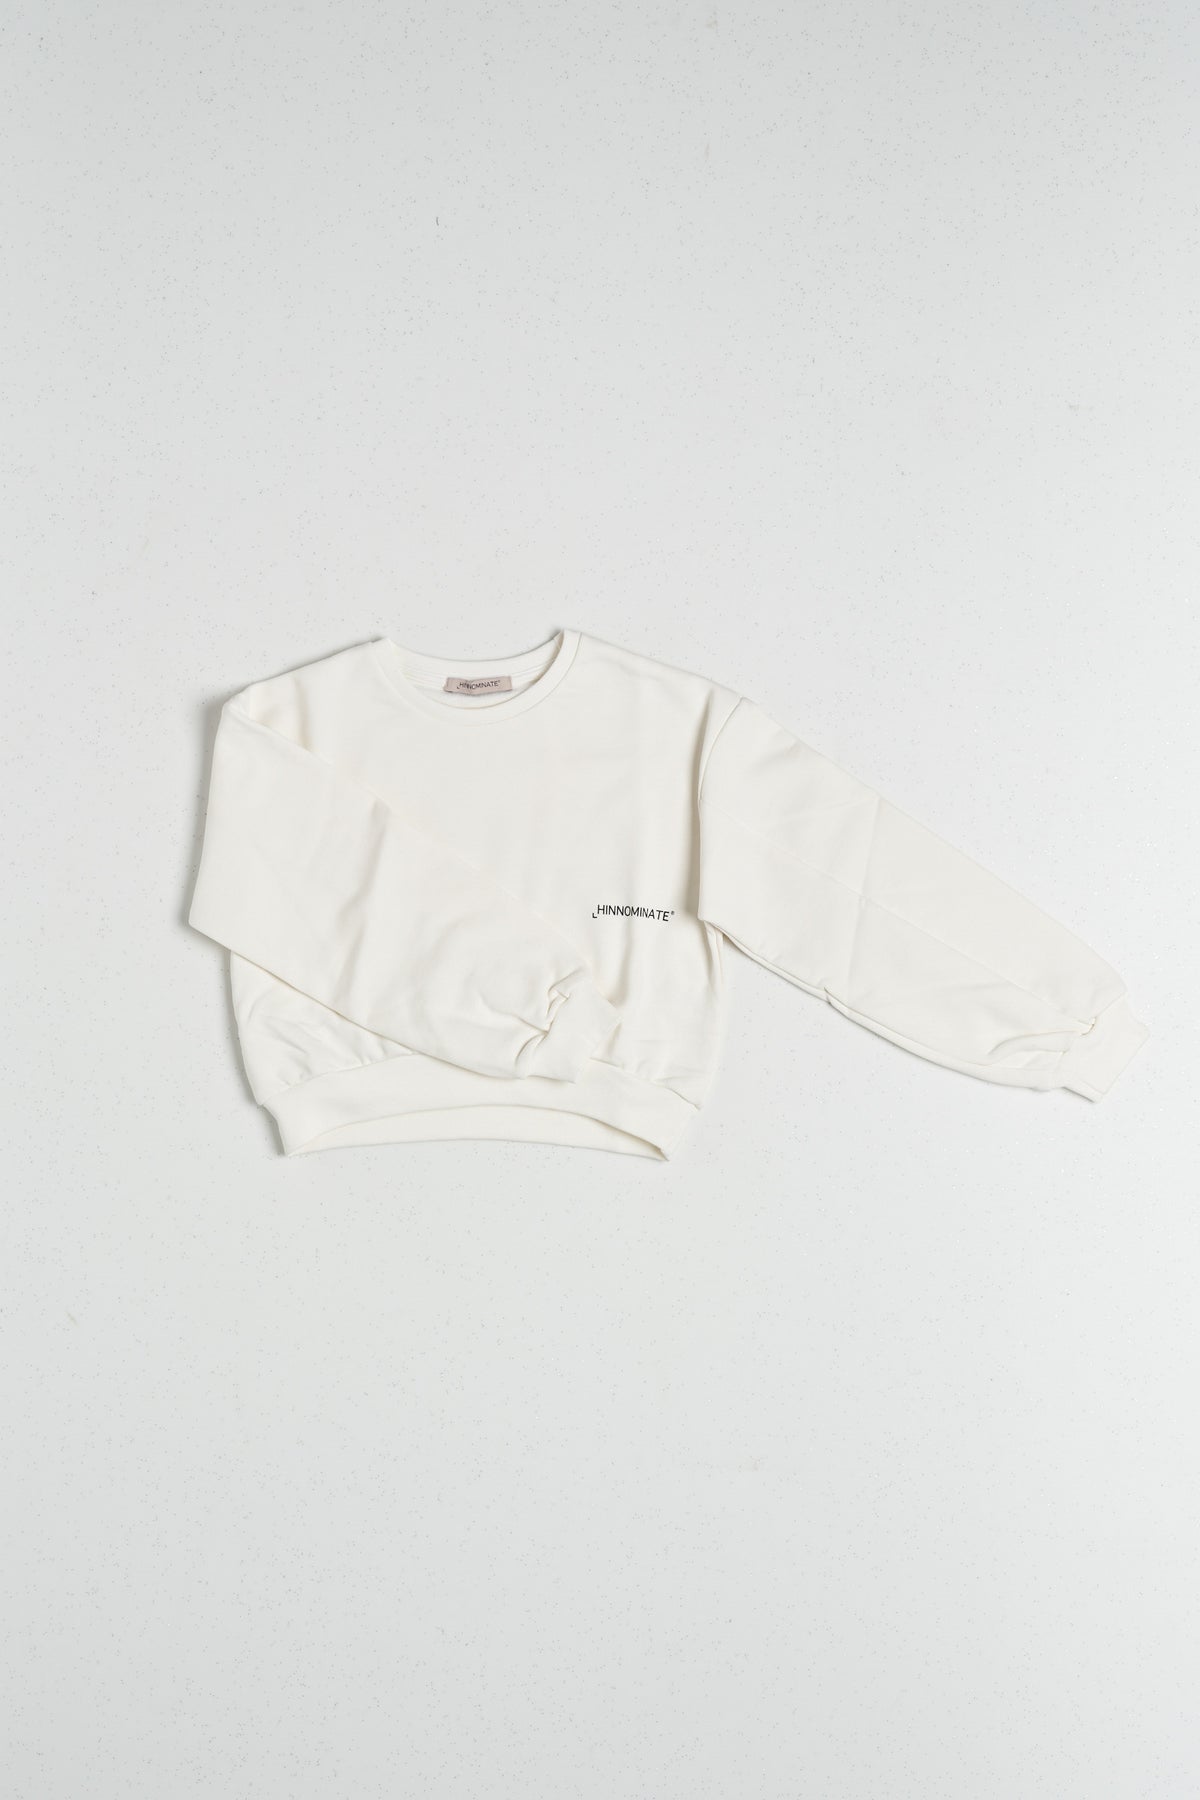 Hinnominate Felpa Cropped Bianco Bambina - 1